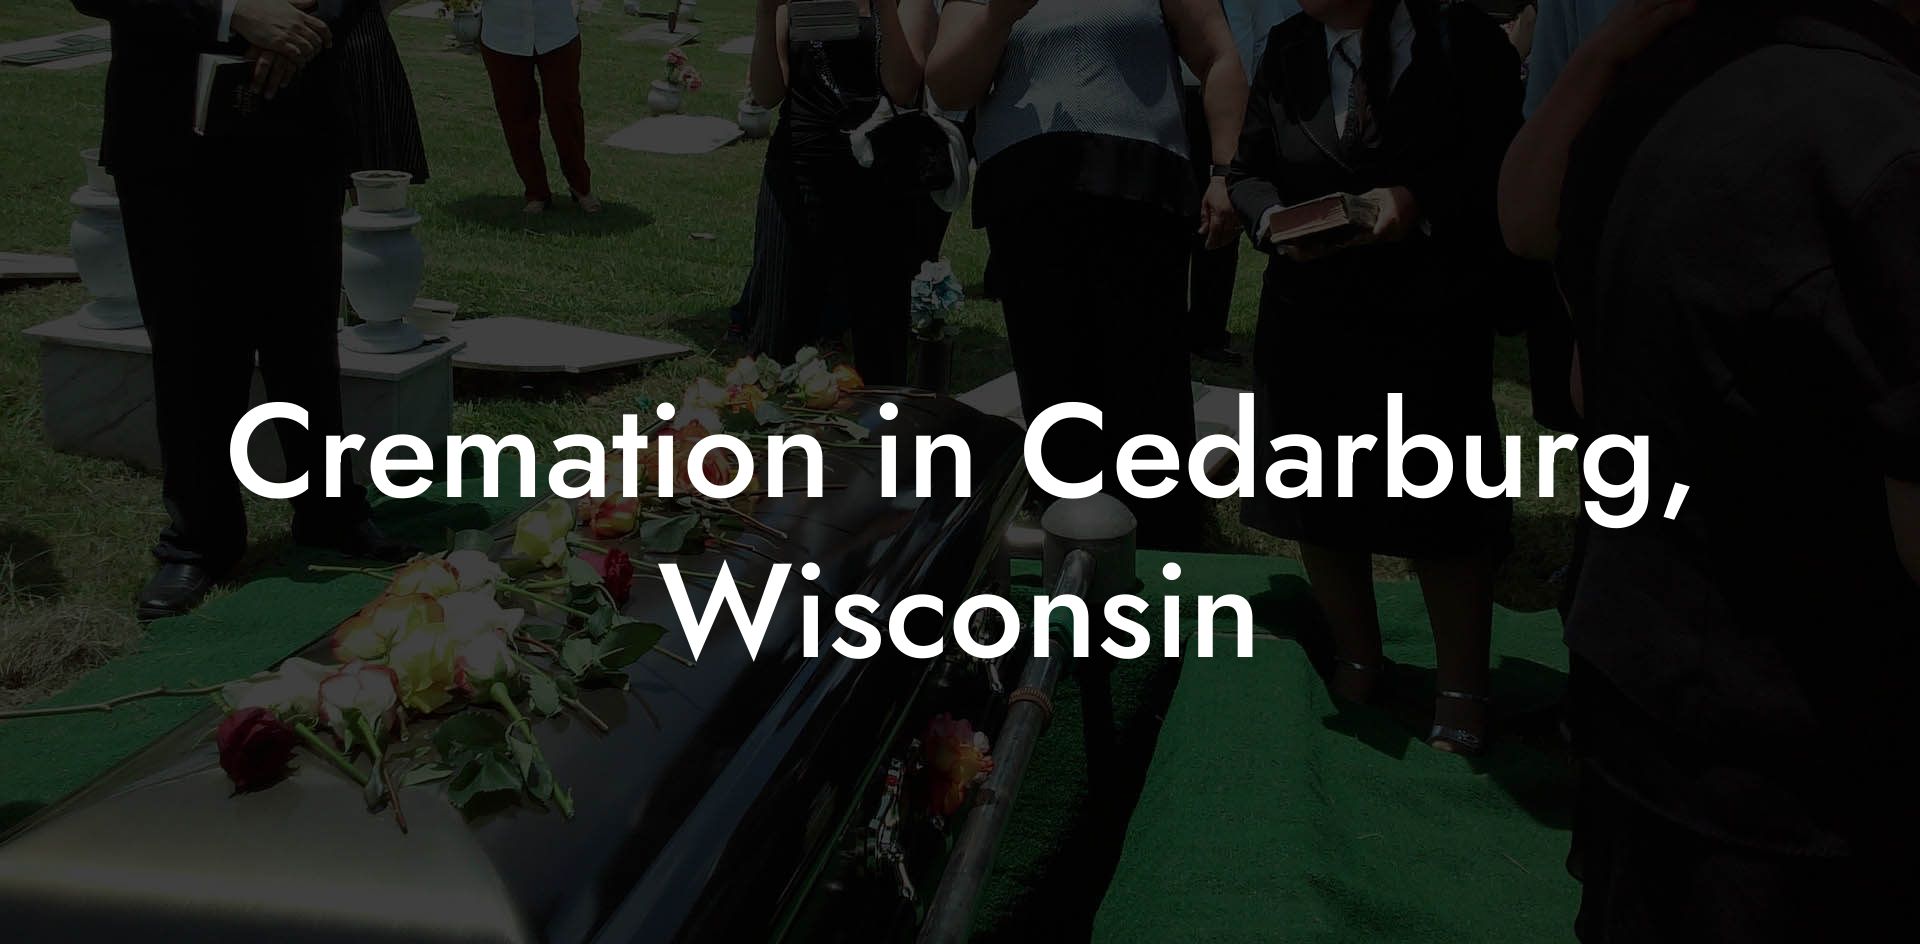 Cremation in Cedarburg, Wisconsin